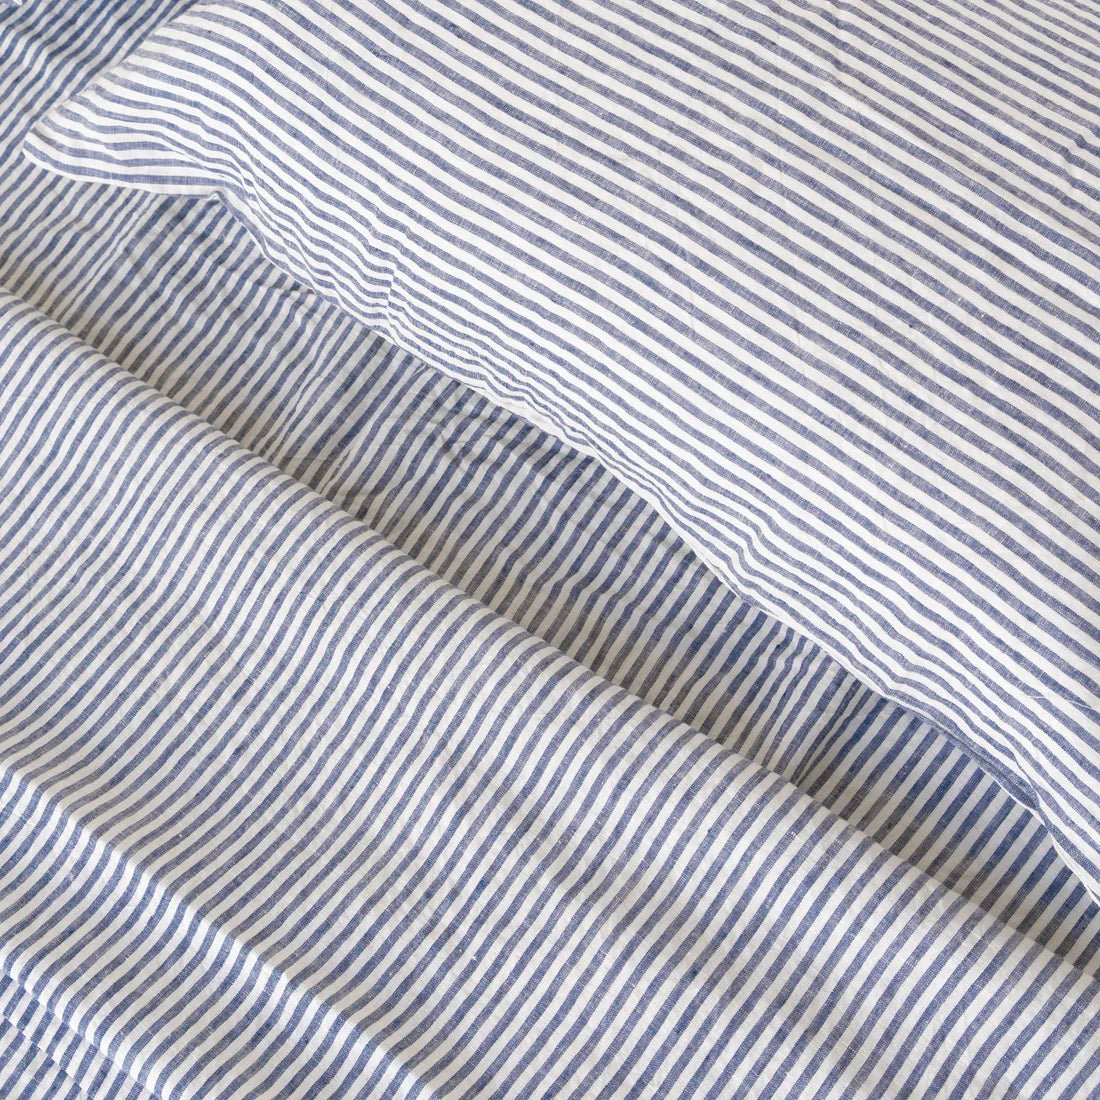 Linen Pillowcase Set - Marine Stripe